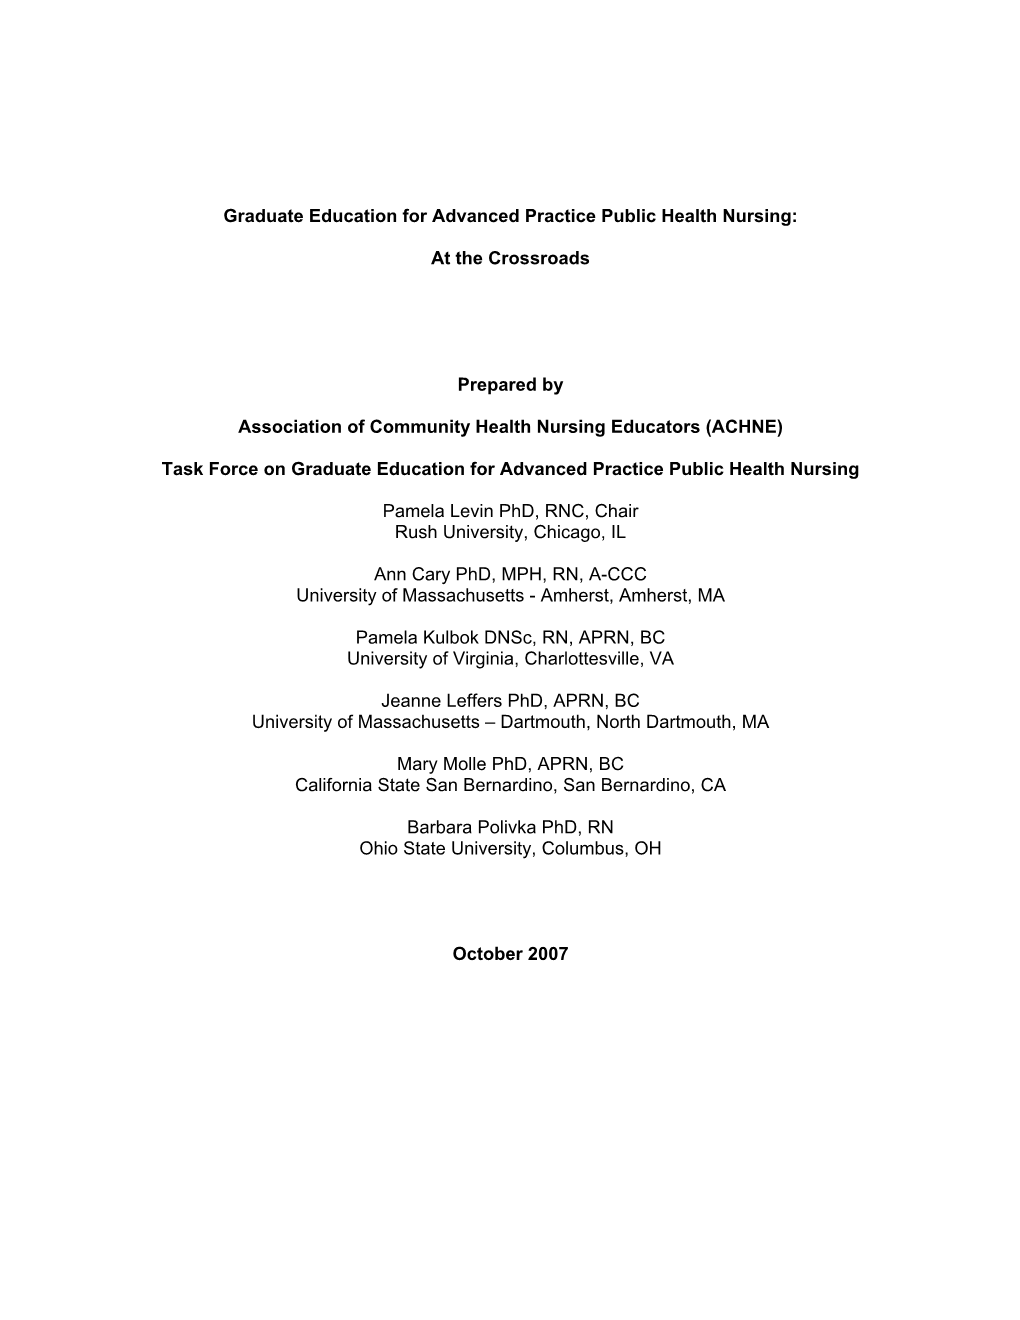 Graduate Education for Advanced Practice Public Health Nursing: at the Crossroads (2007)